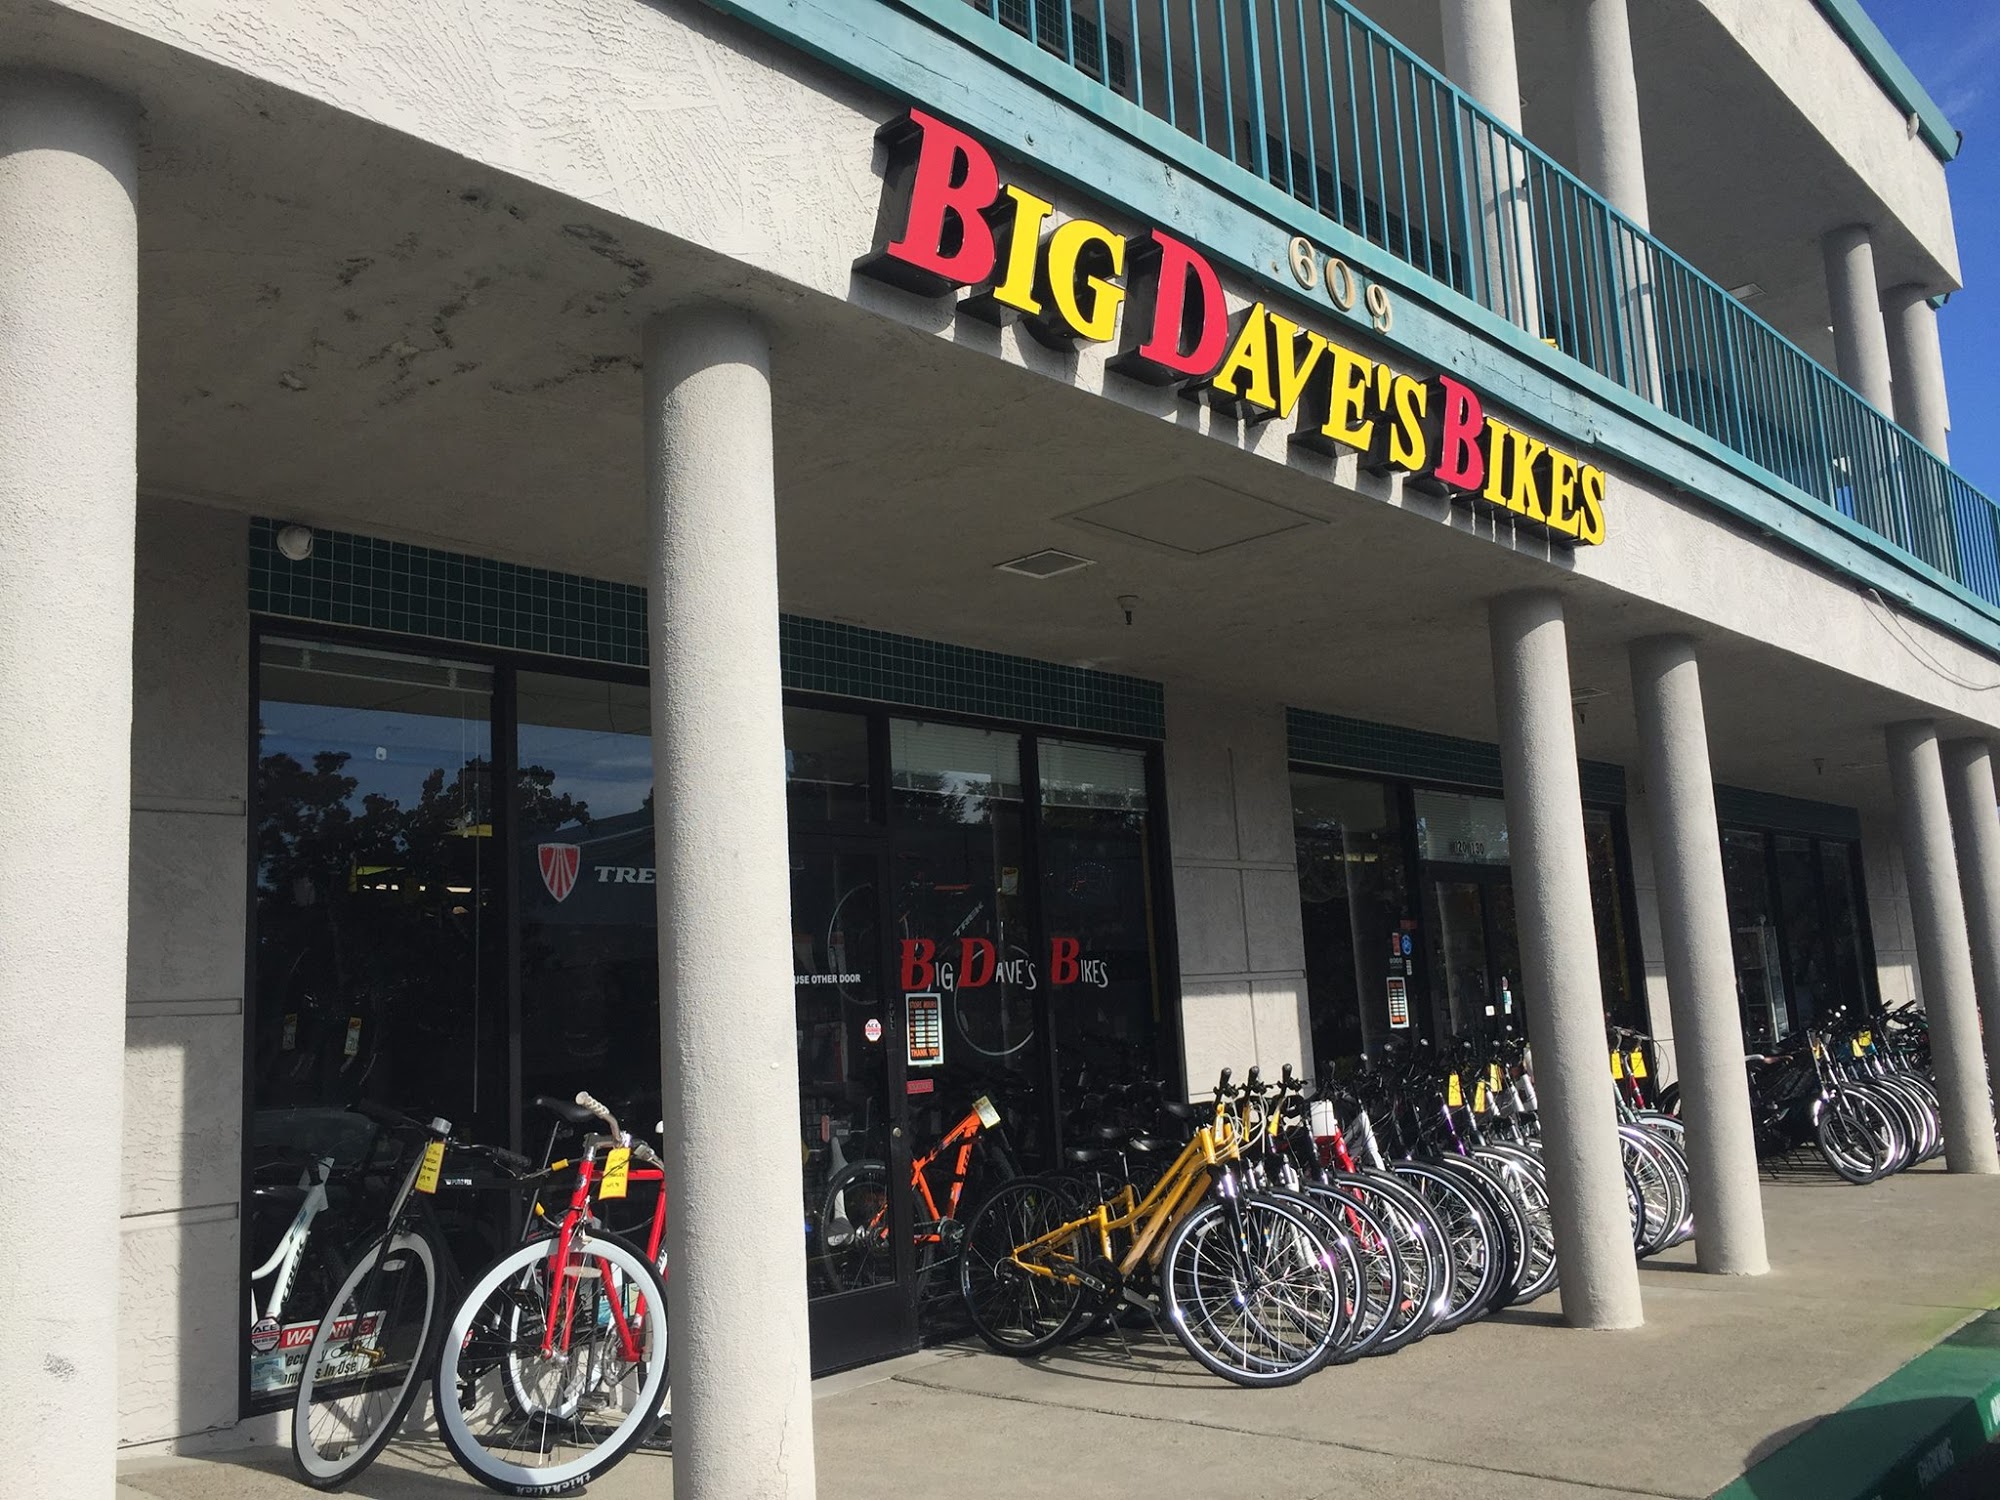 Big Dave's Bikes